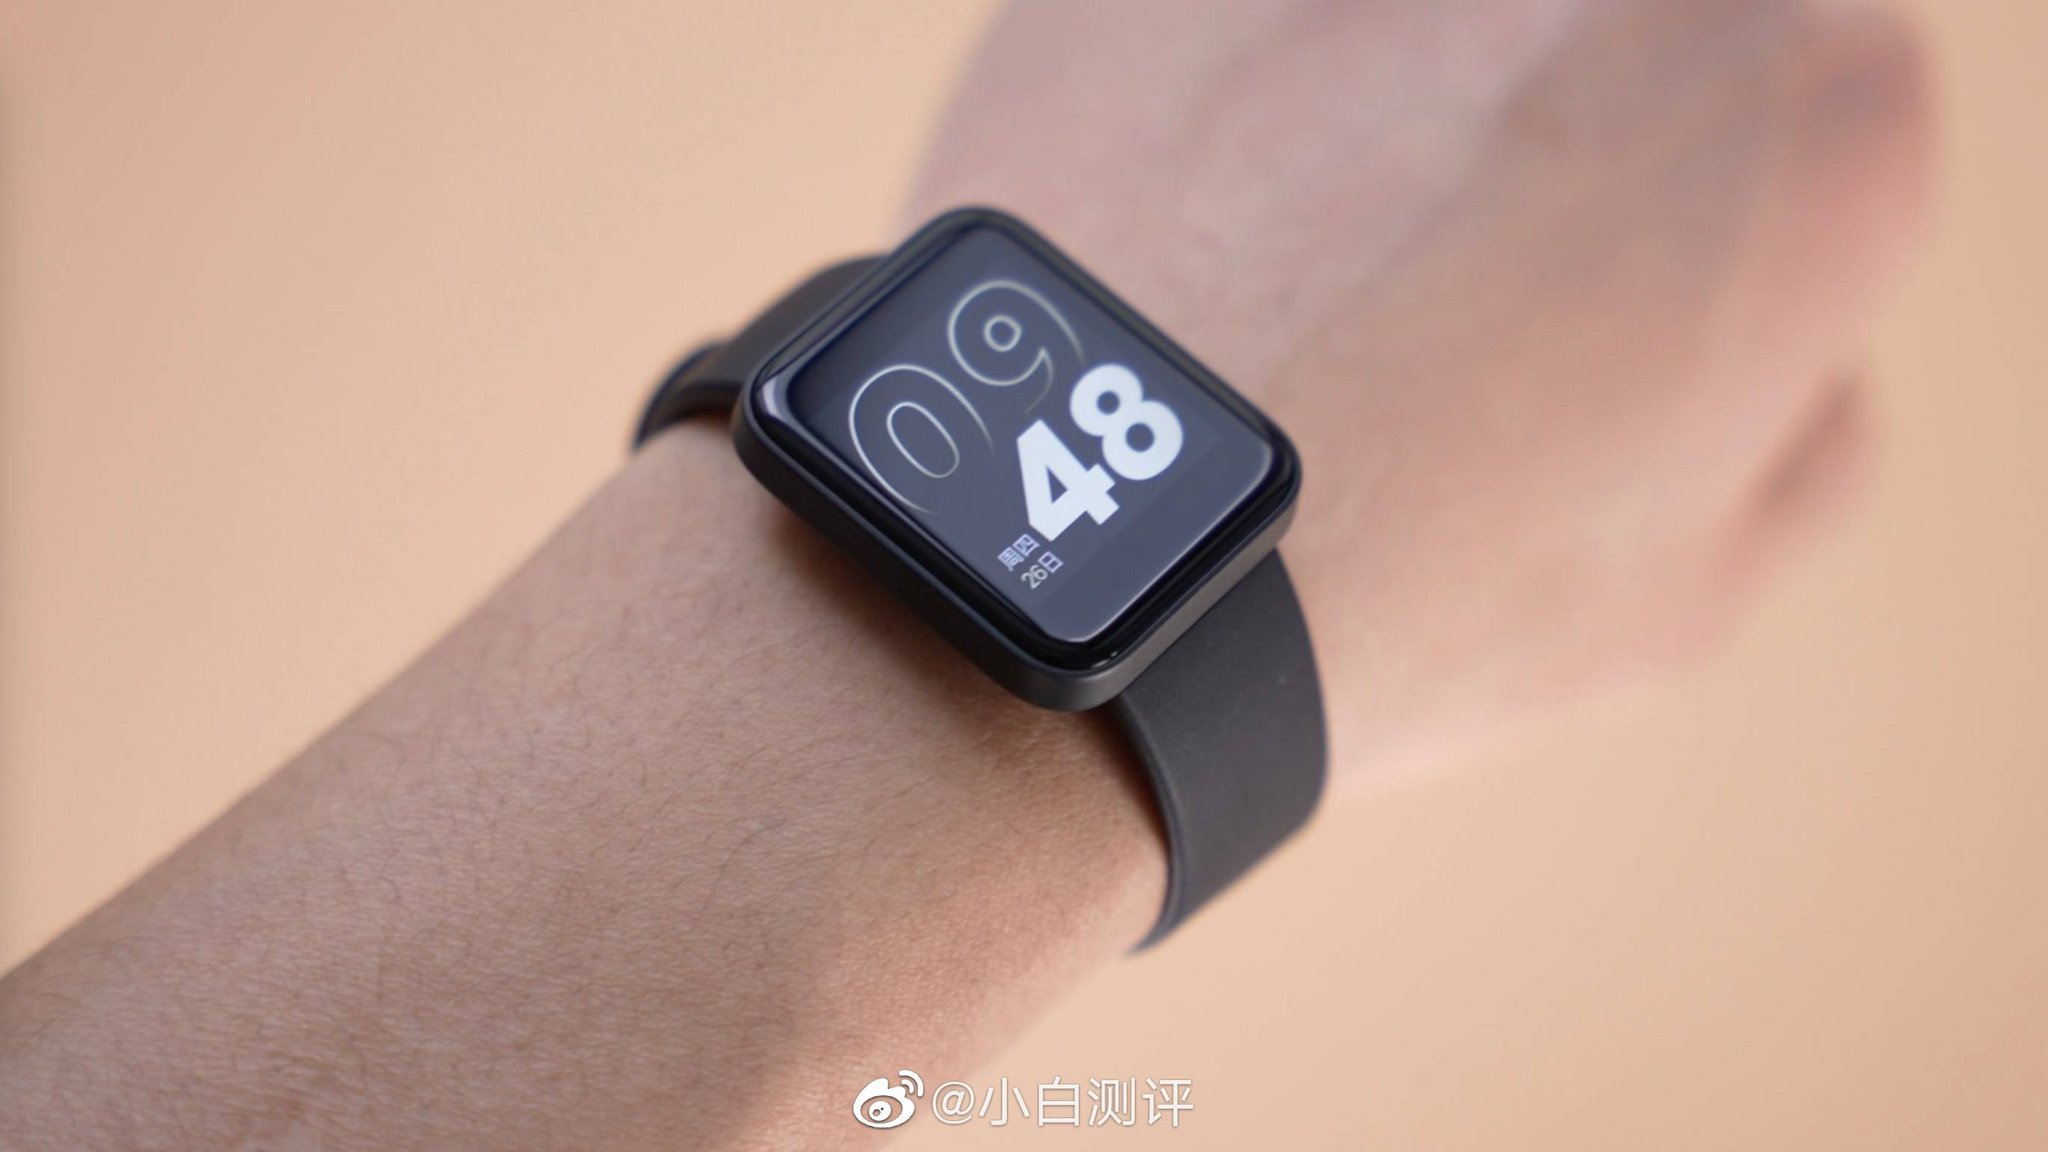 Dns Xiaomi Mi Watch Lite Ru 1.4